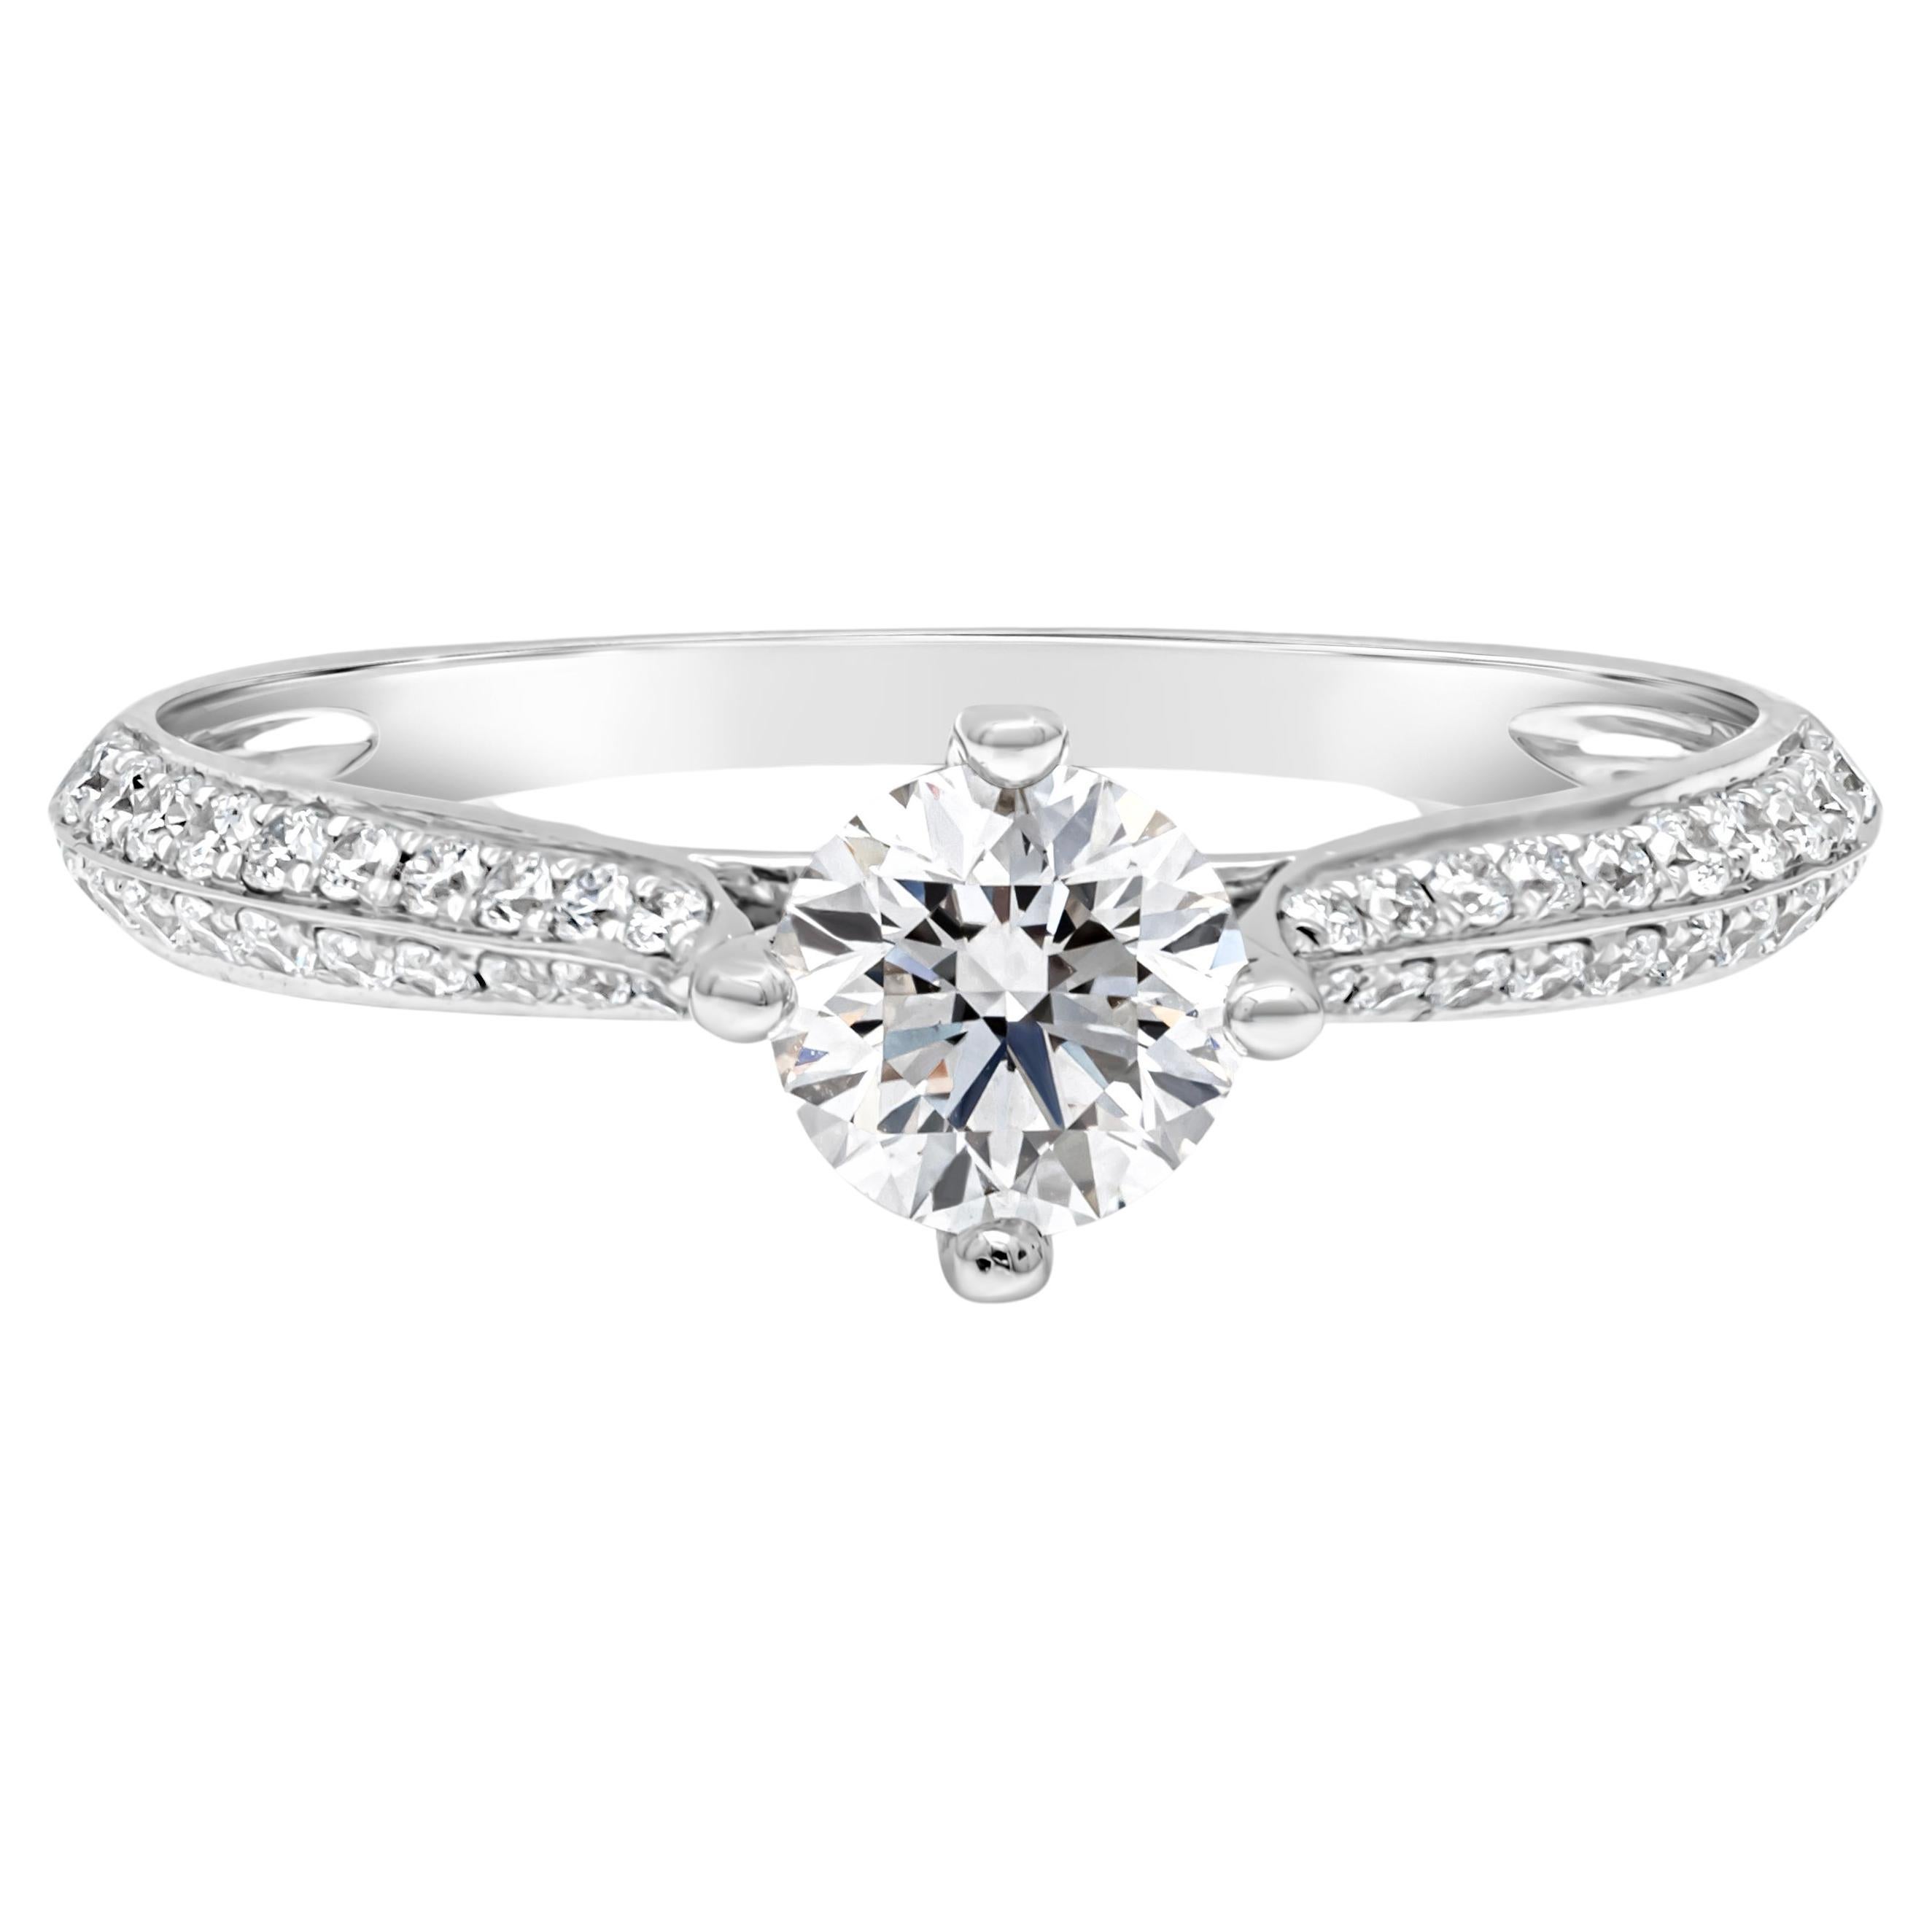 GIA Certified 0.51 Carat Round Brilliant Cut Diamond Pavé-Set Engagement Ring